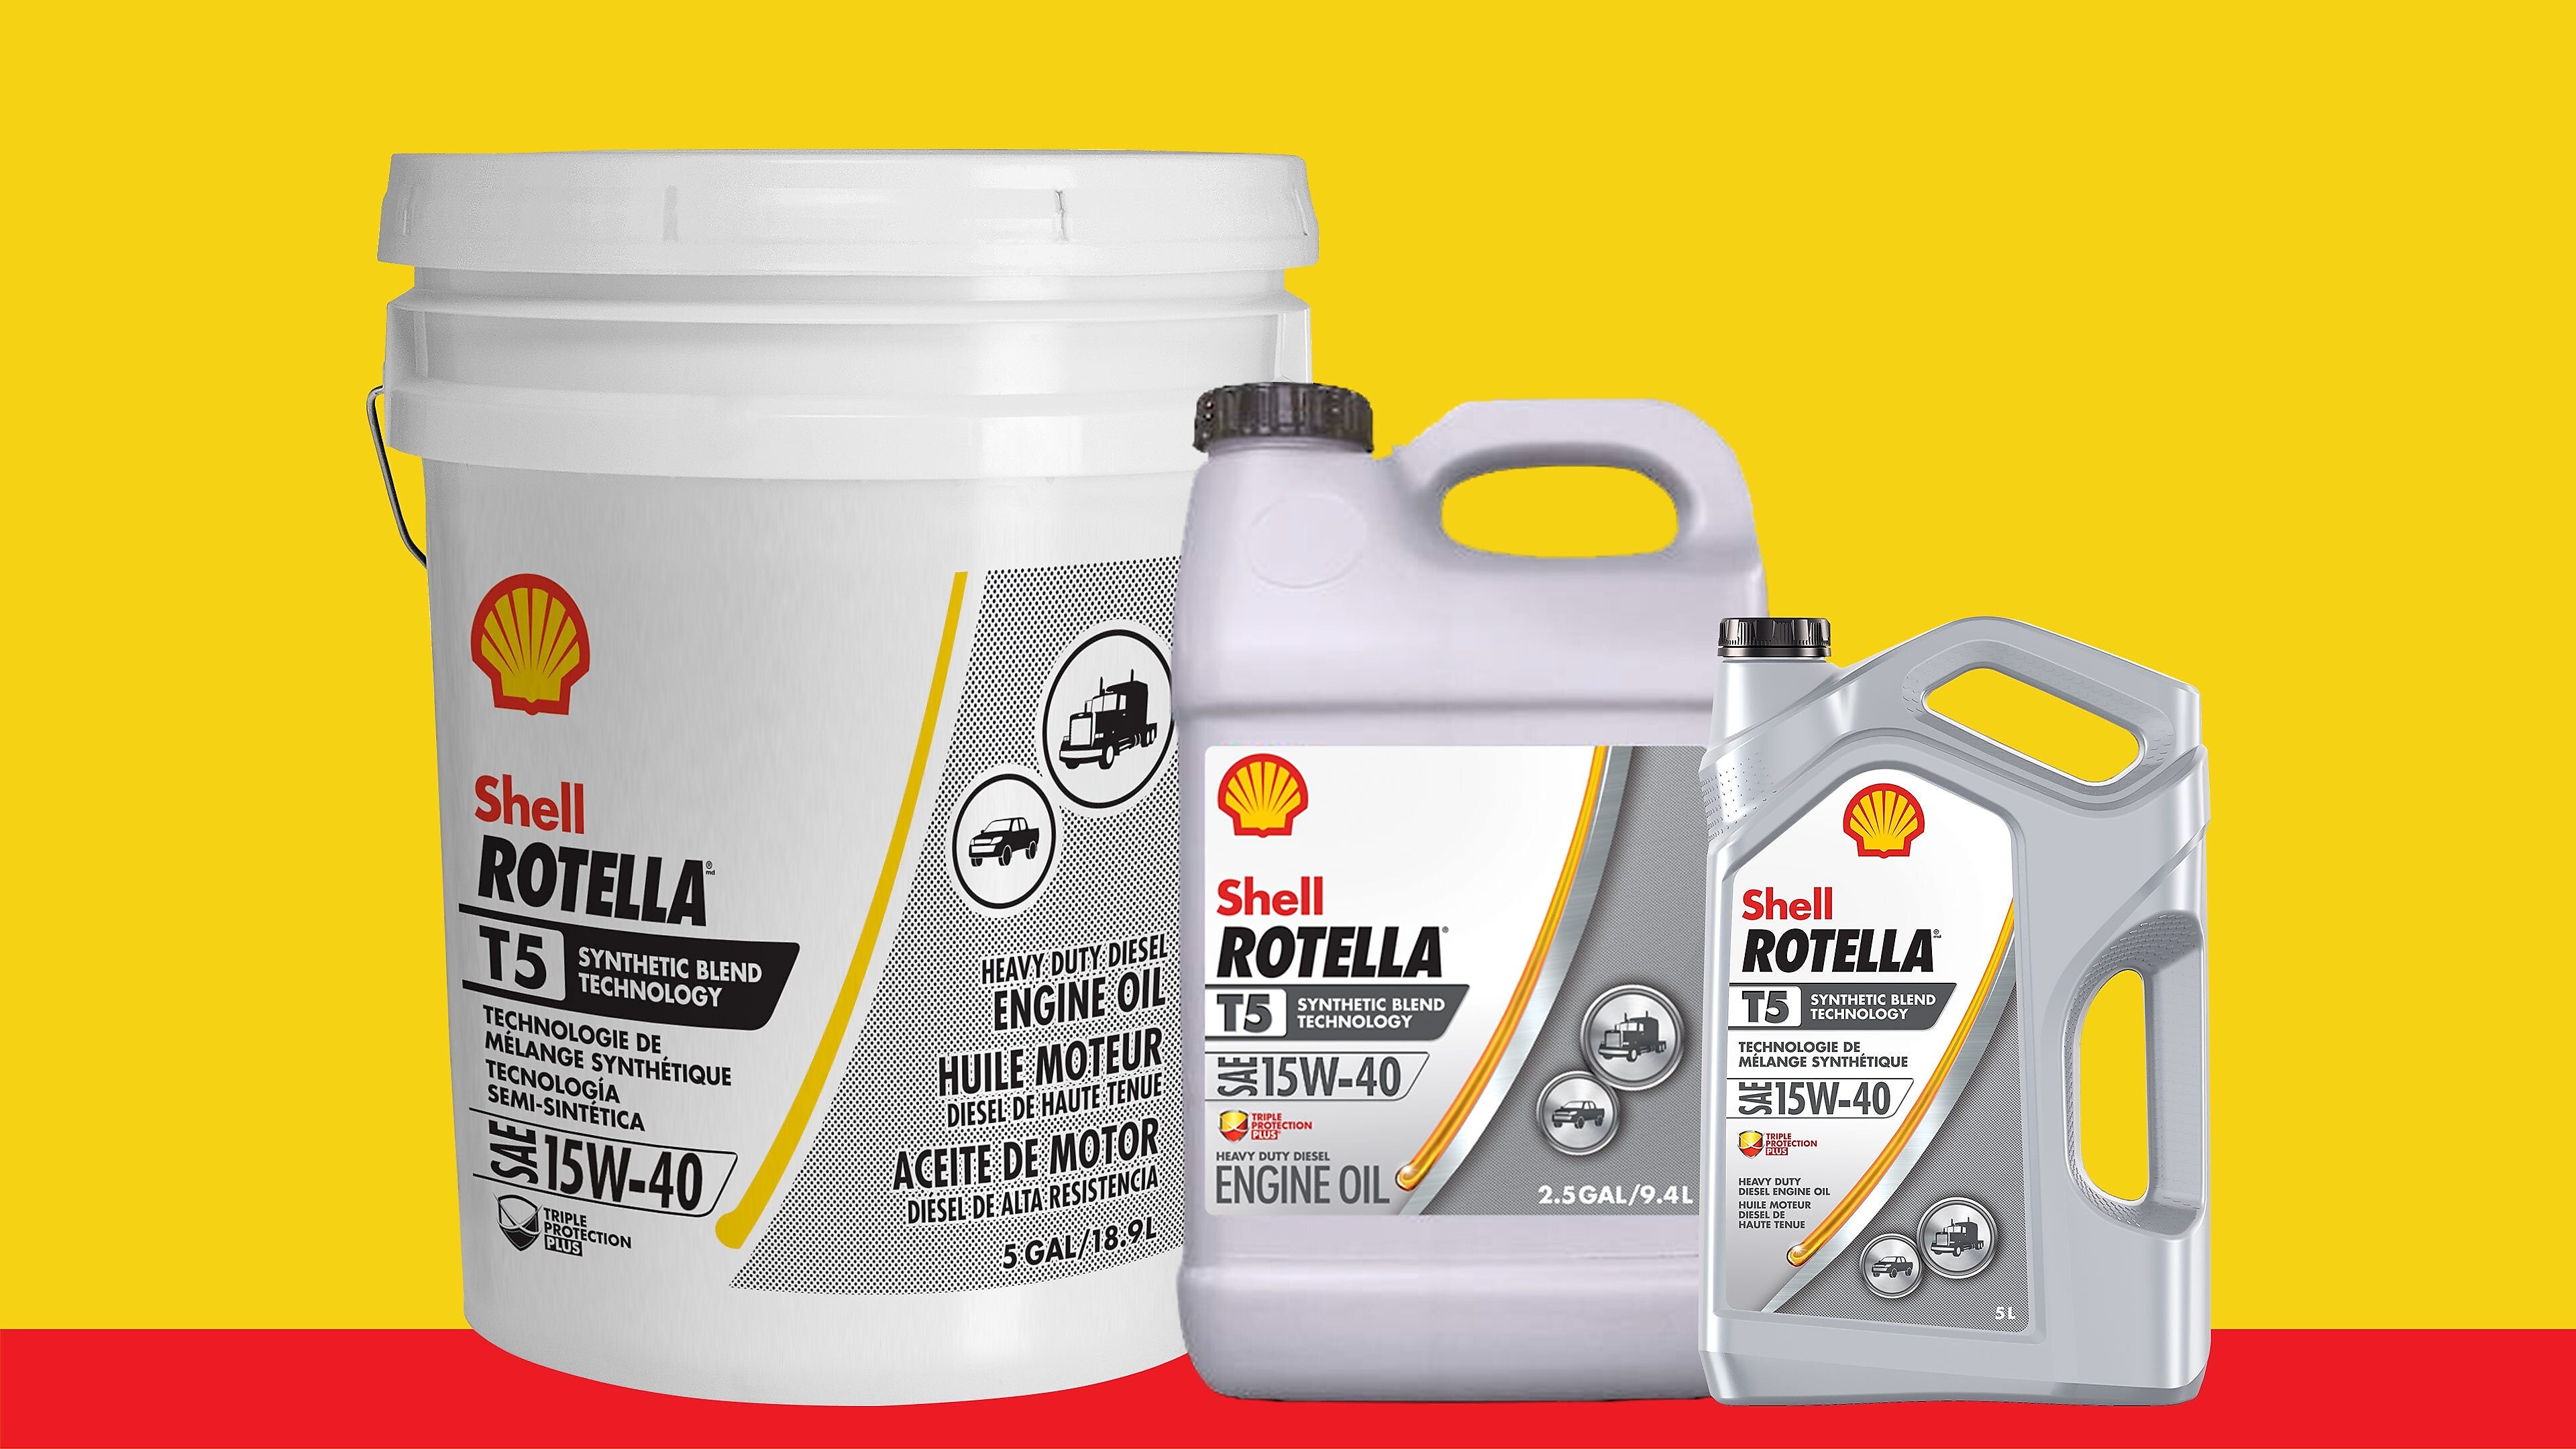 Shell Rotella T5 Rebate